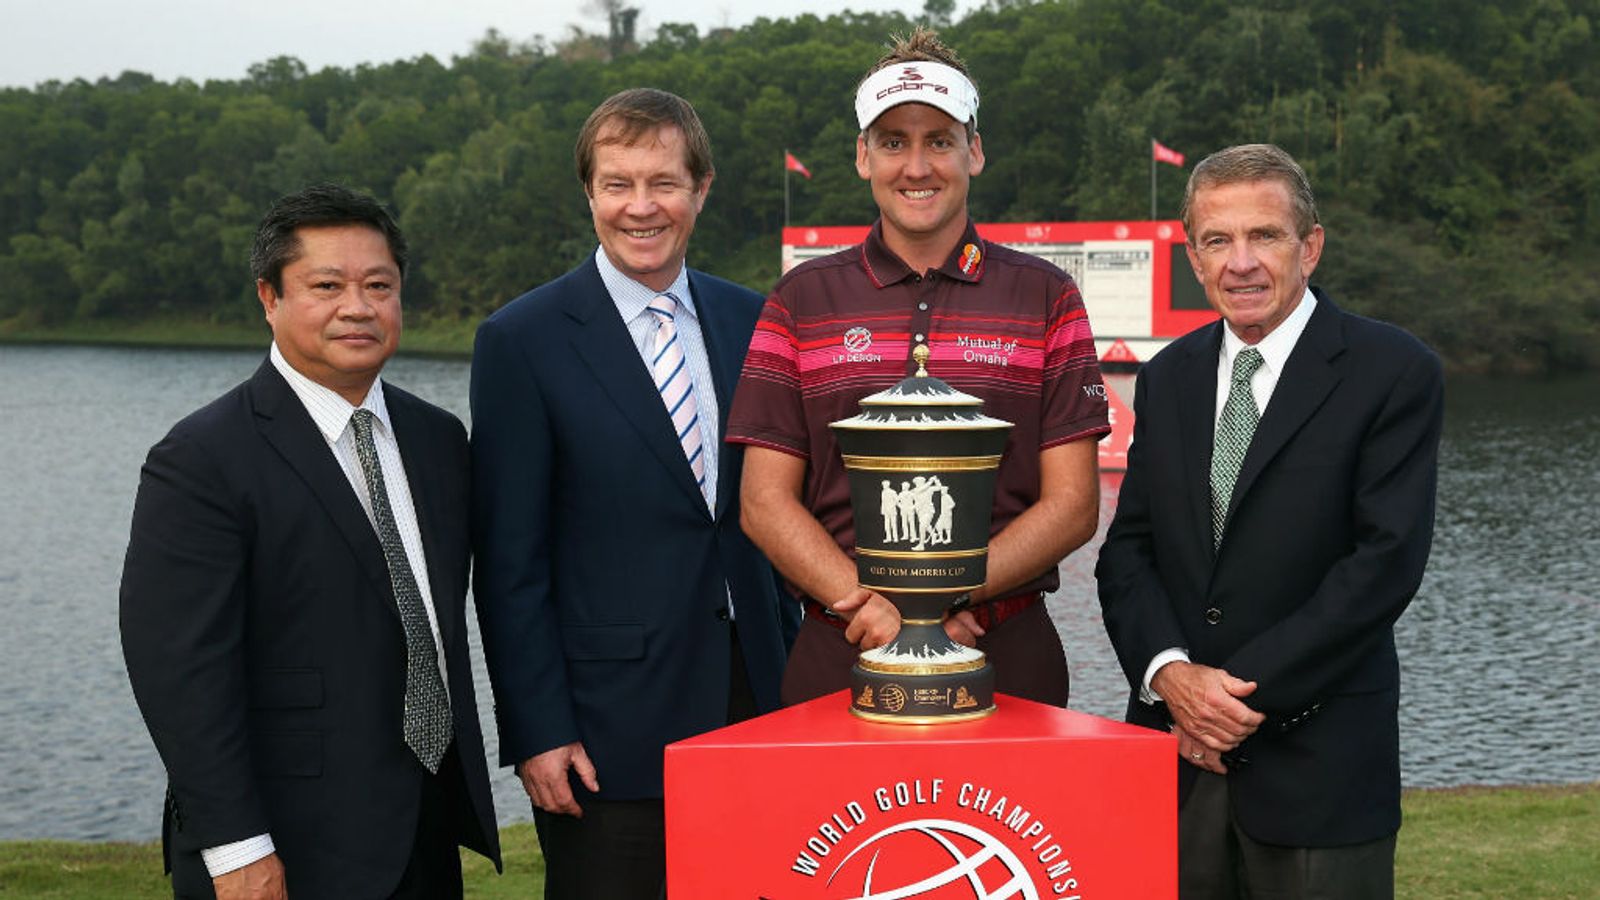 WGCHSBC Champions to part of the PGA Tour's FedEx Cup schedule